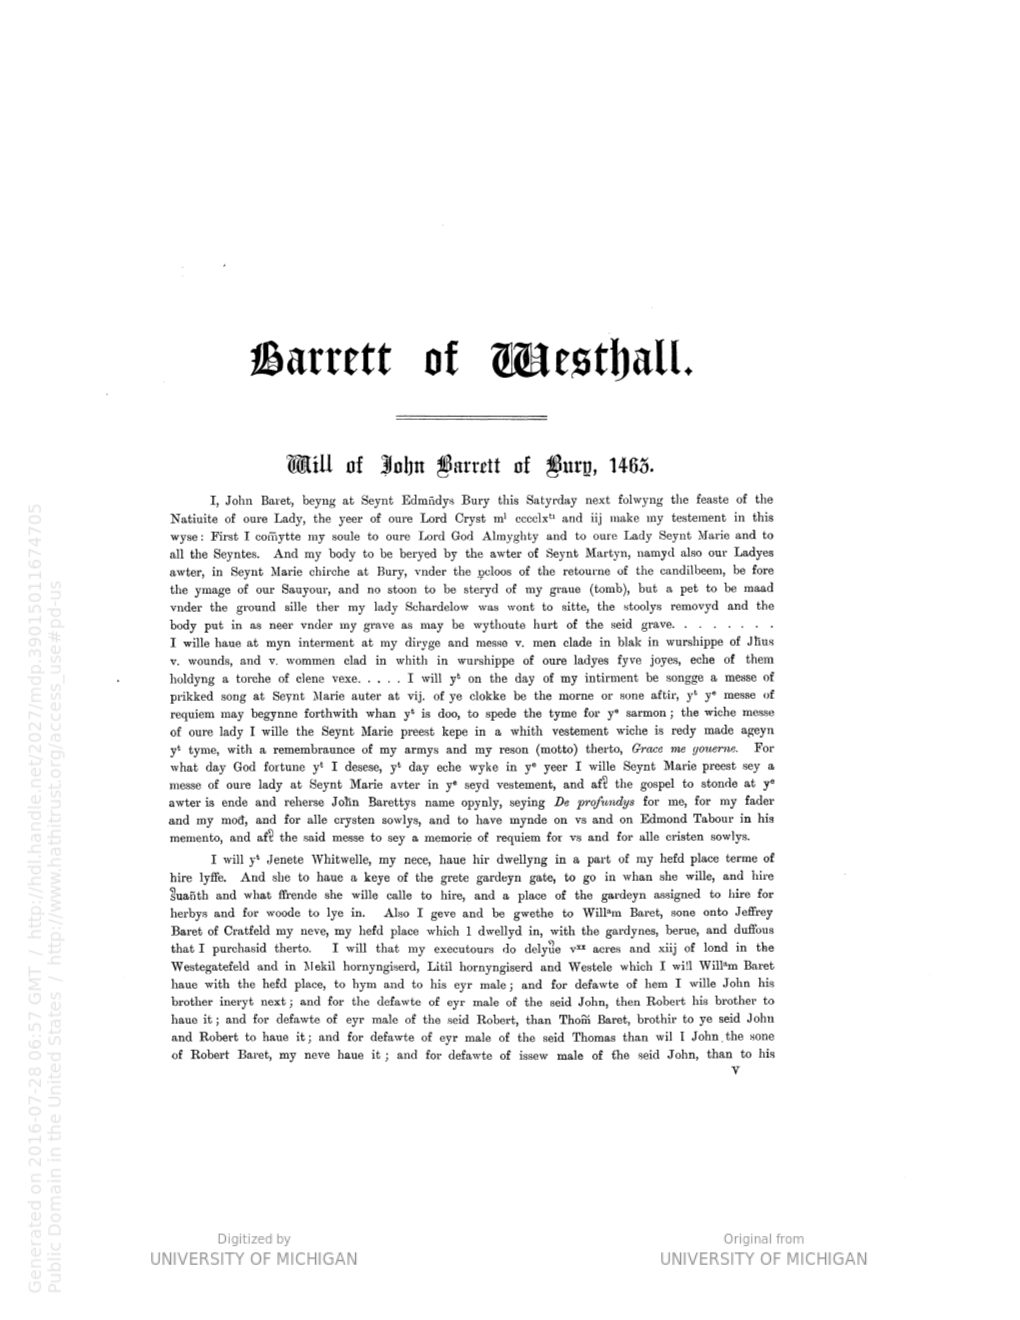 Barrett of Westhall